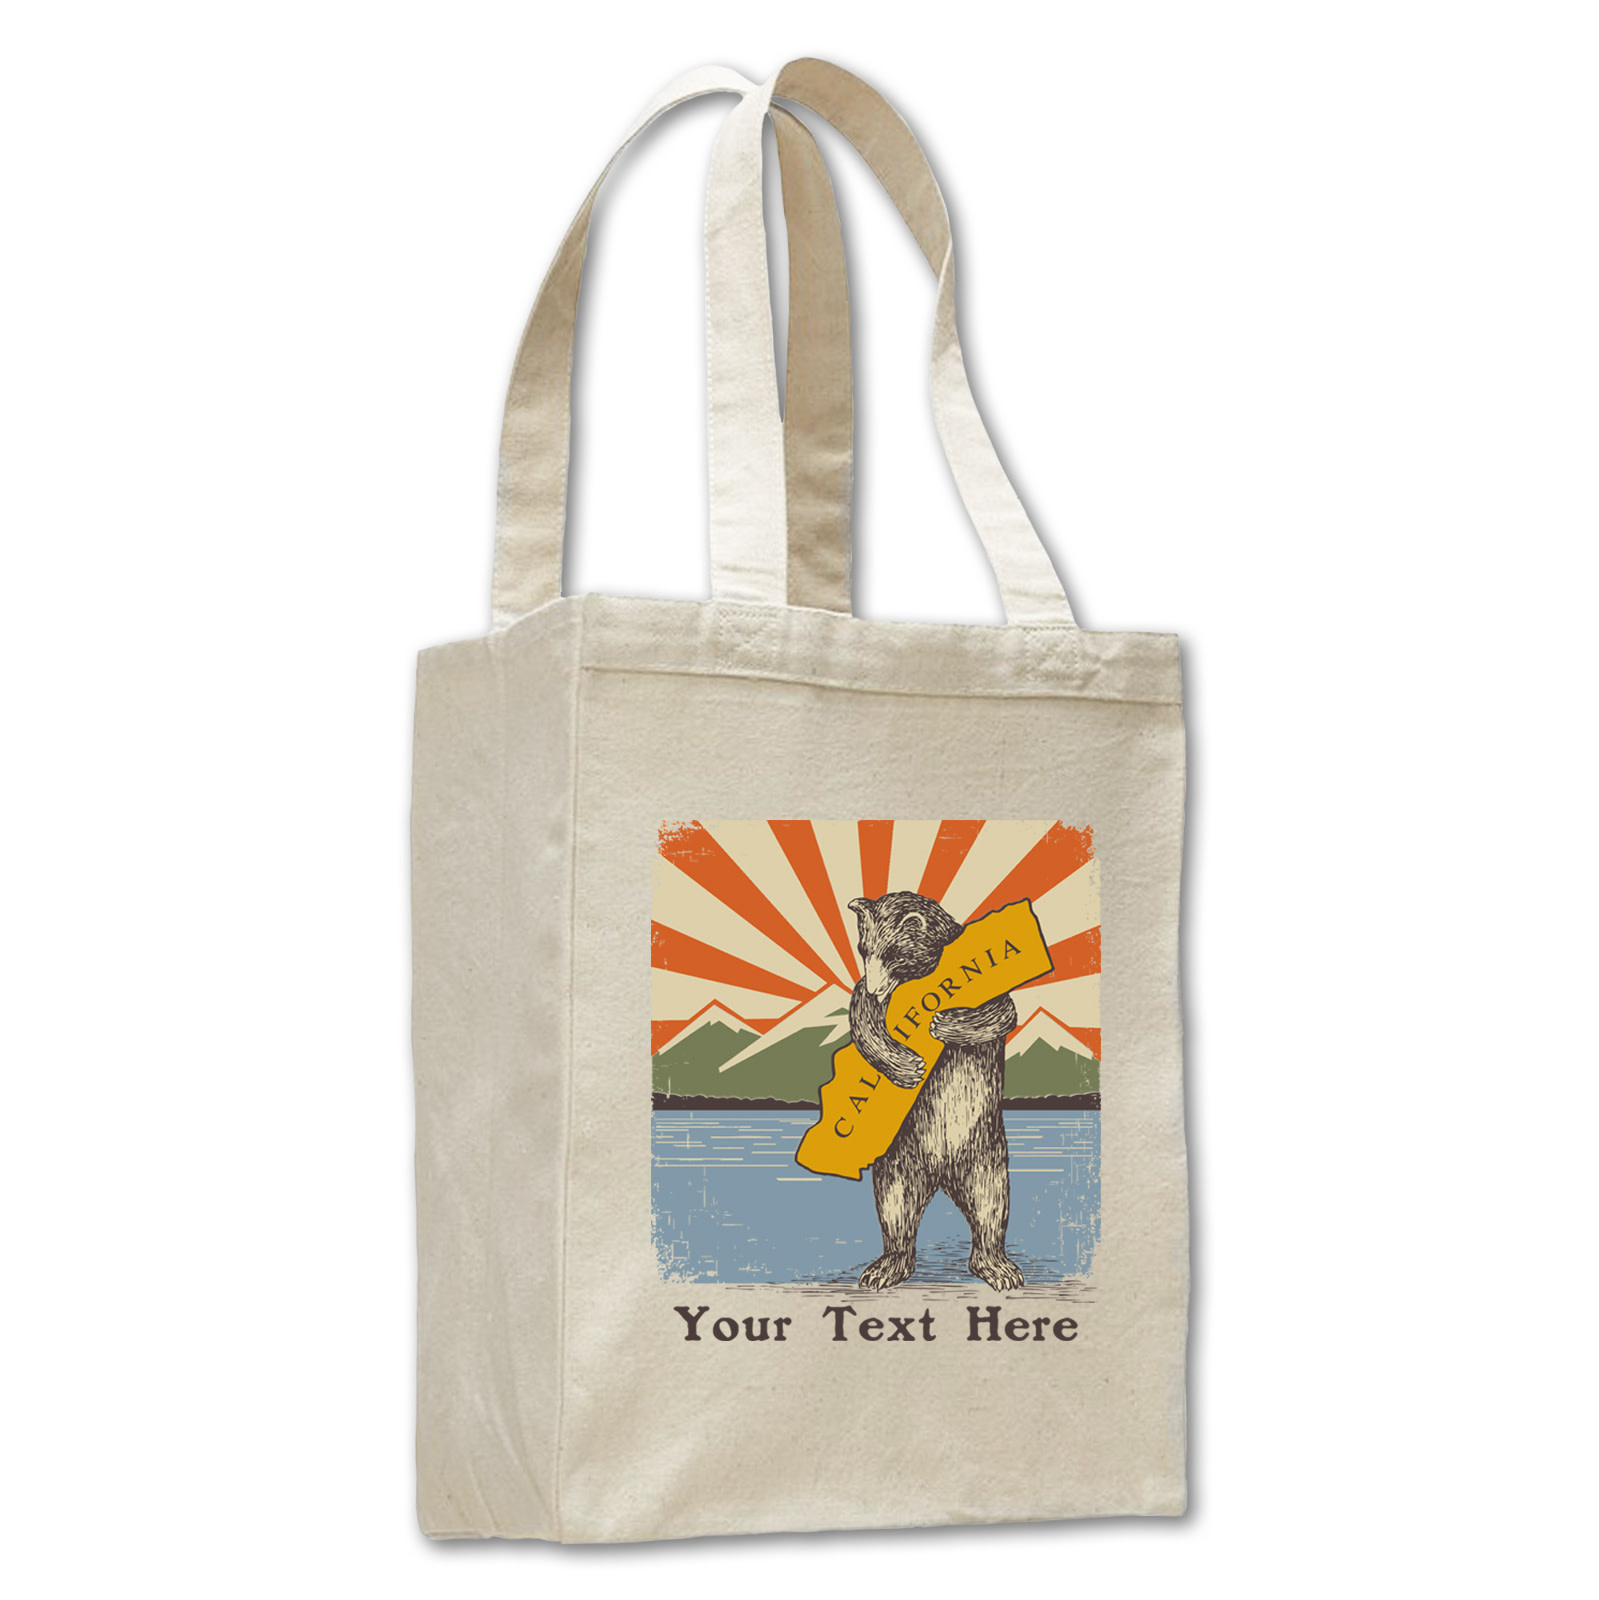 Customizable SM Canvas Tote / Book Bag